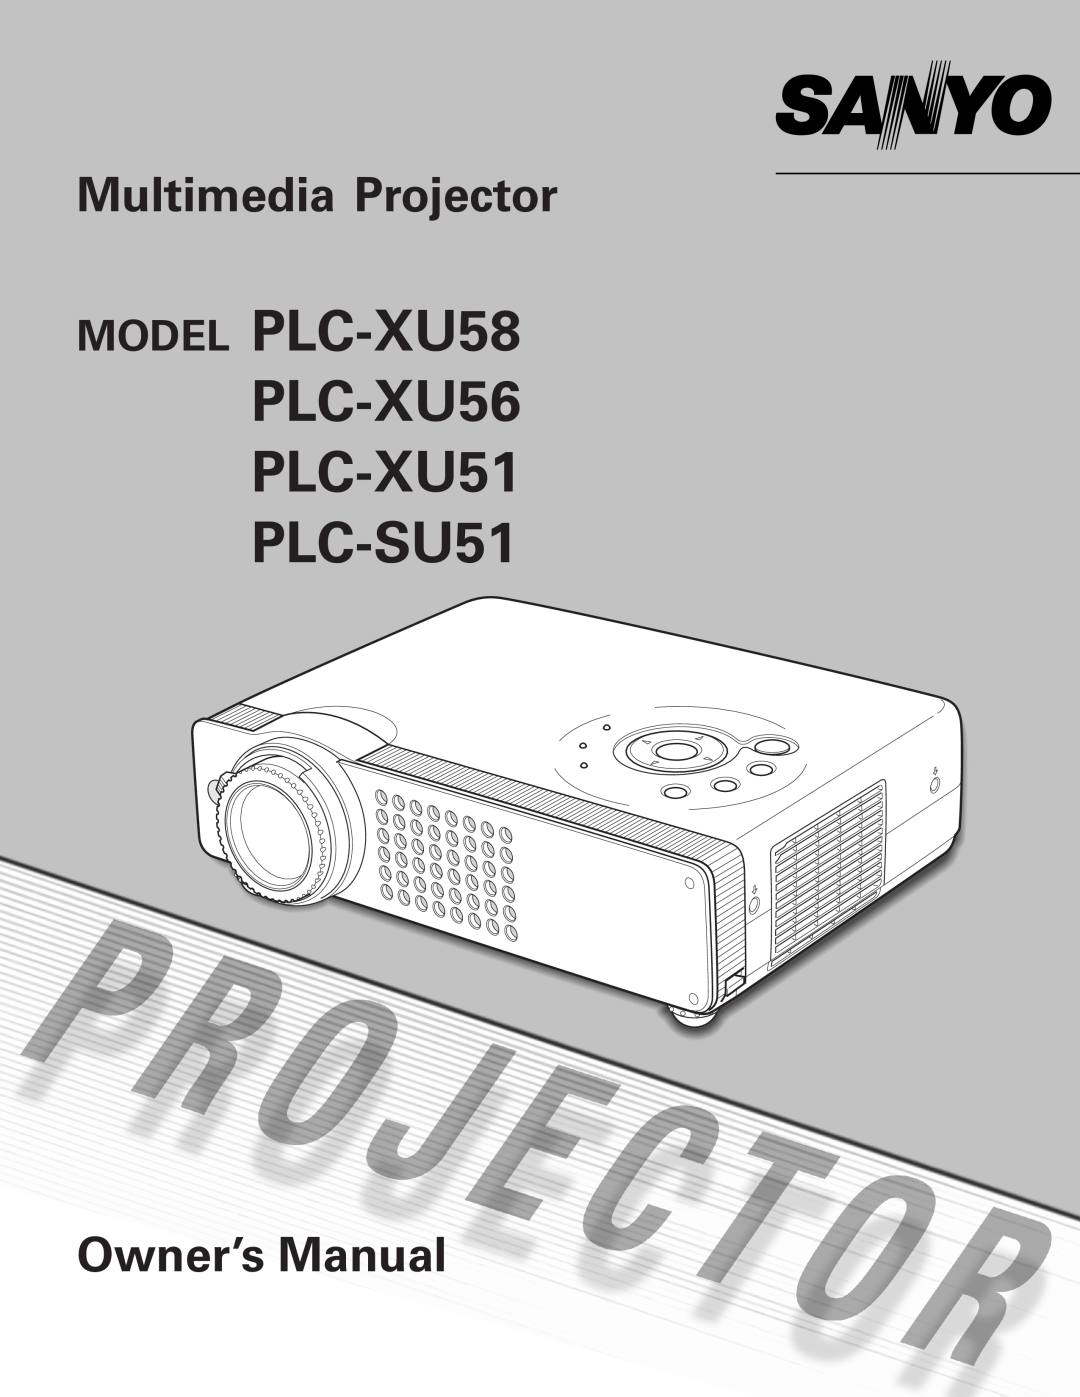 Sanyo owner manual MODEL PLC-XU58 PLC-XU56 PLC-XU51 PLC-SU51, Multimedia Projector, Owner’s Manual 